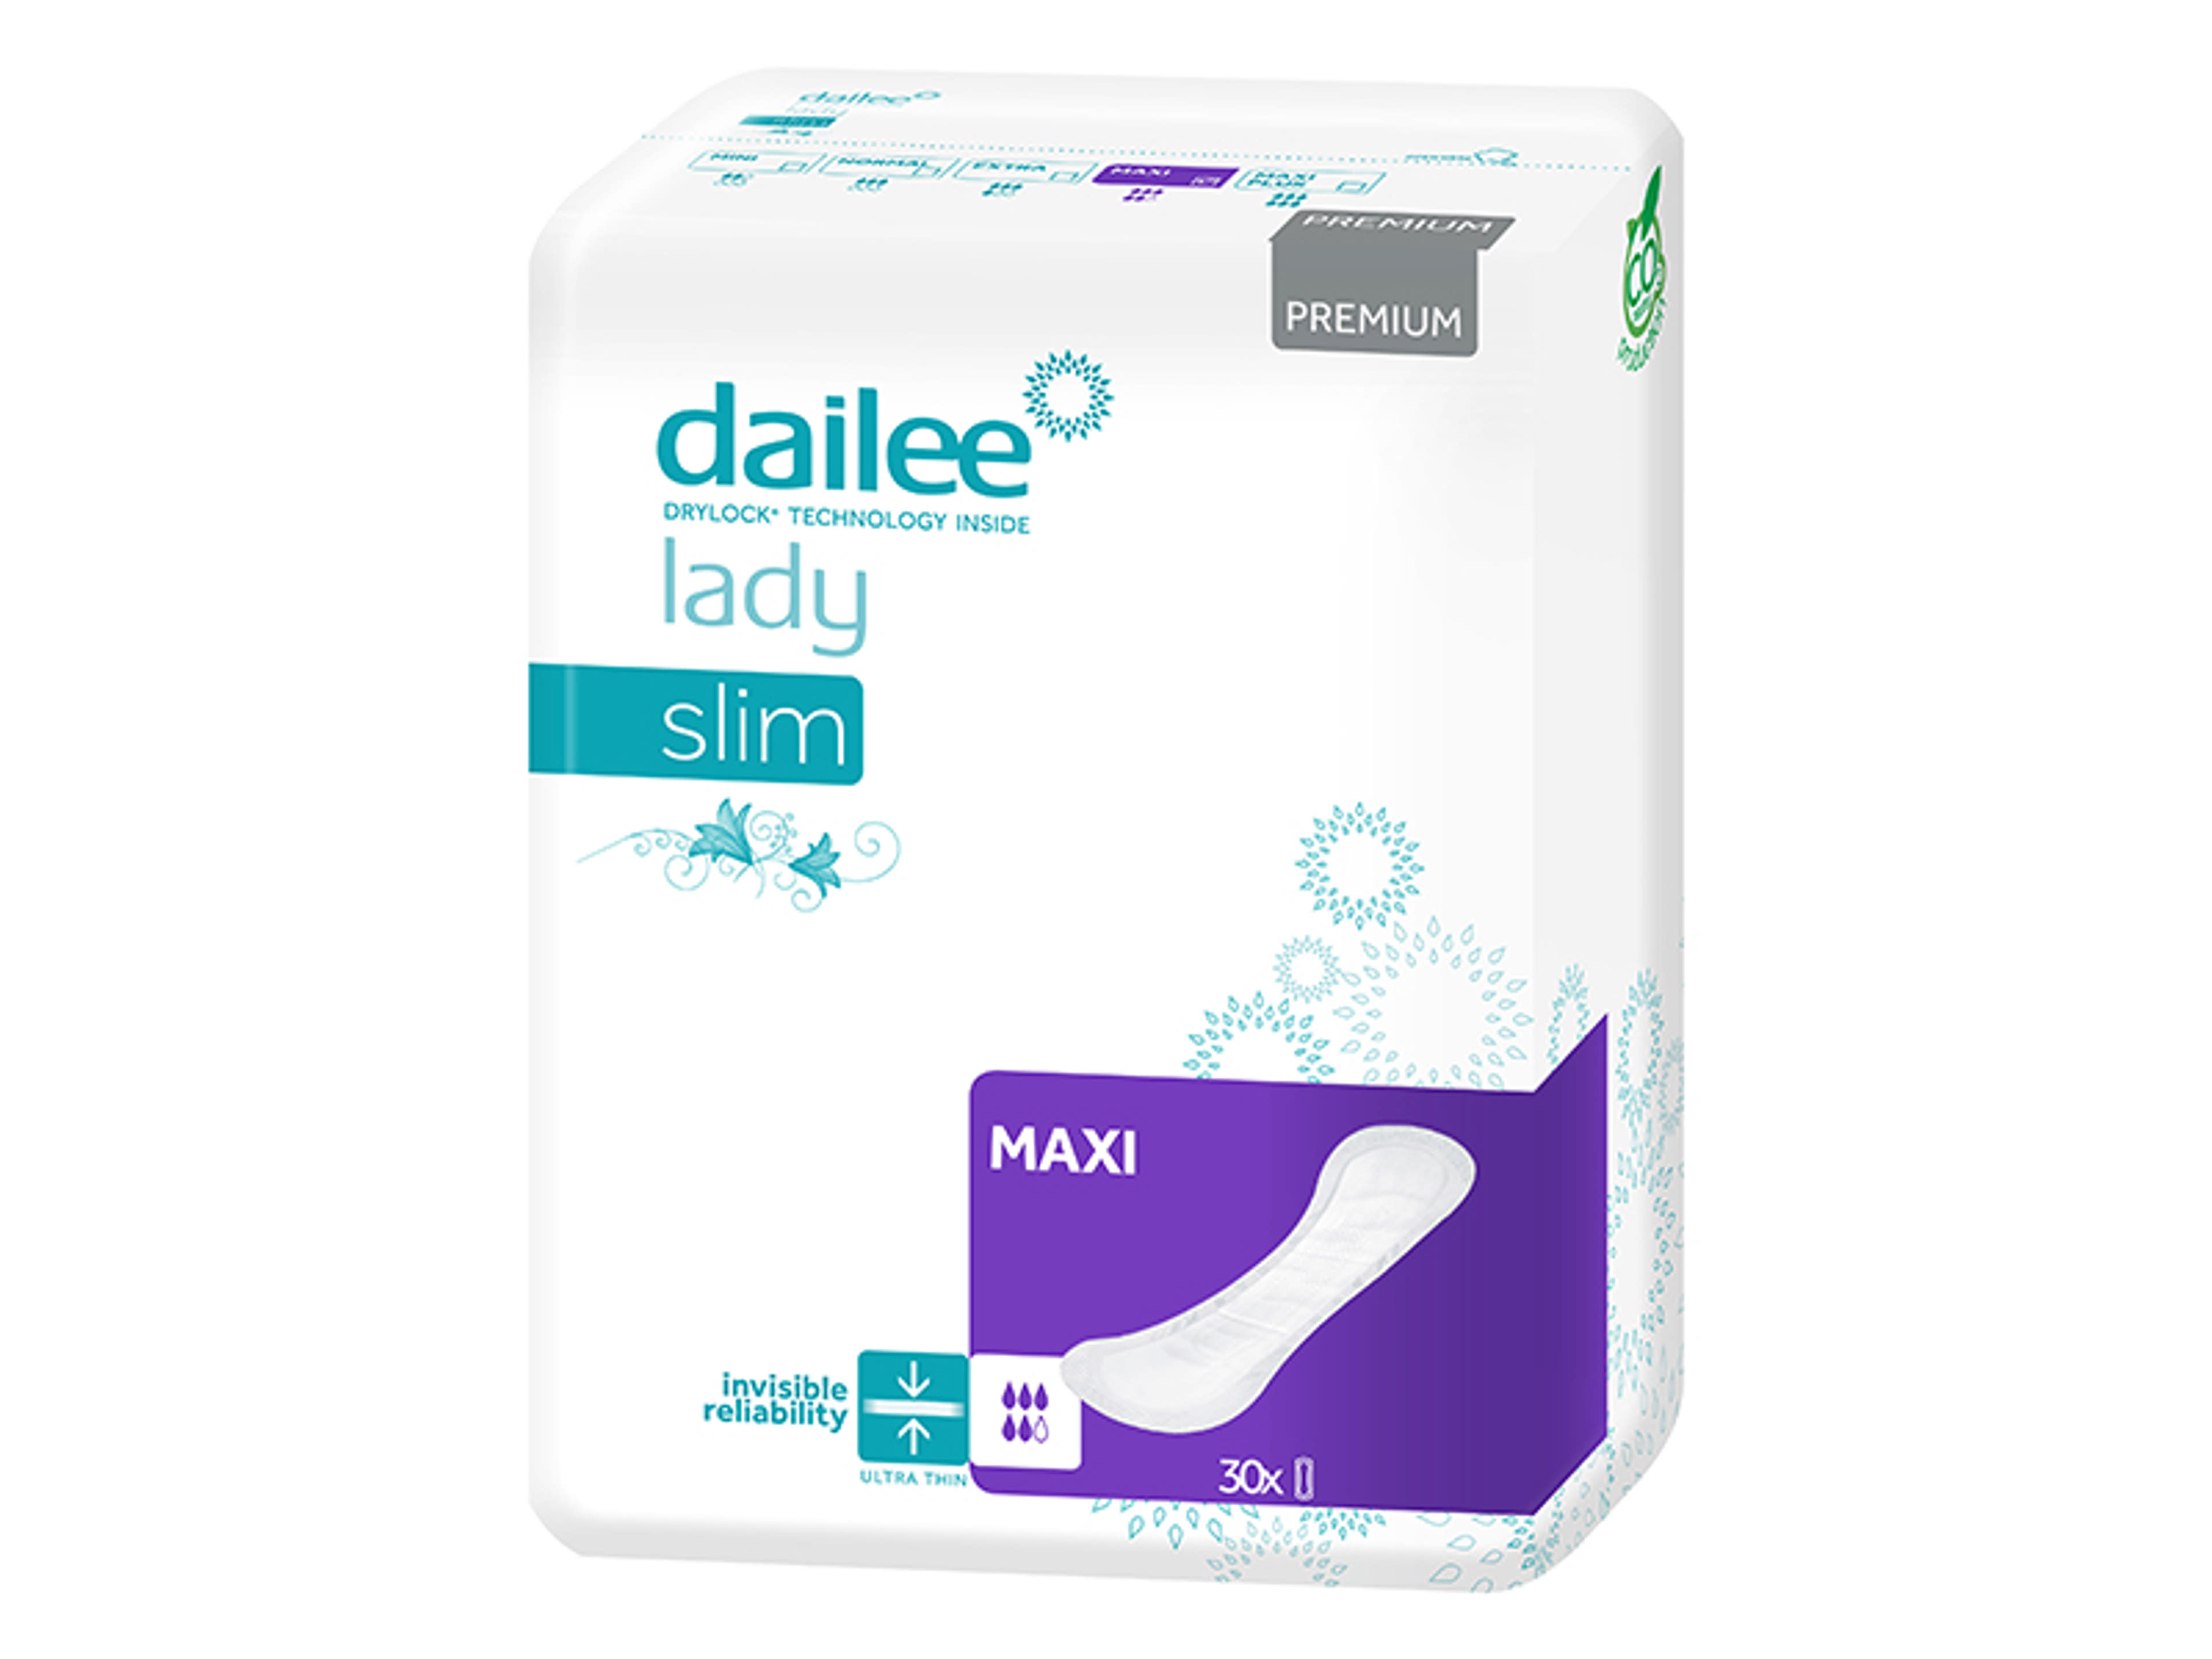 Dailee Lady Premium Slim Maxi inkontinencia betét – 30 db